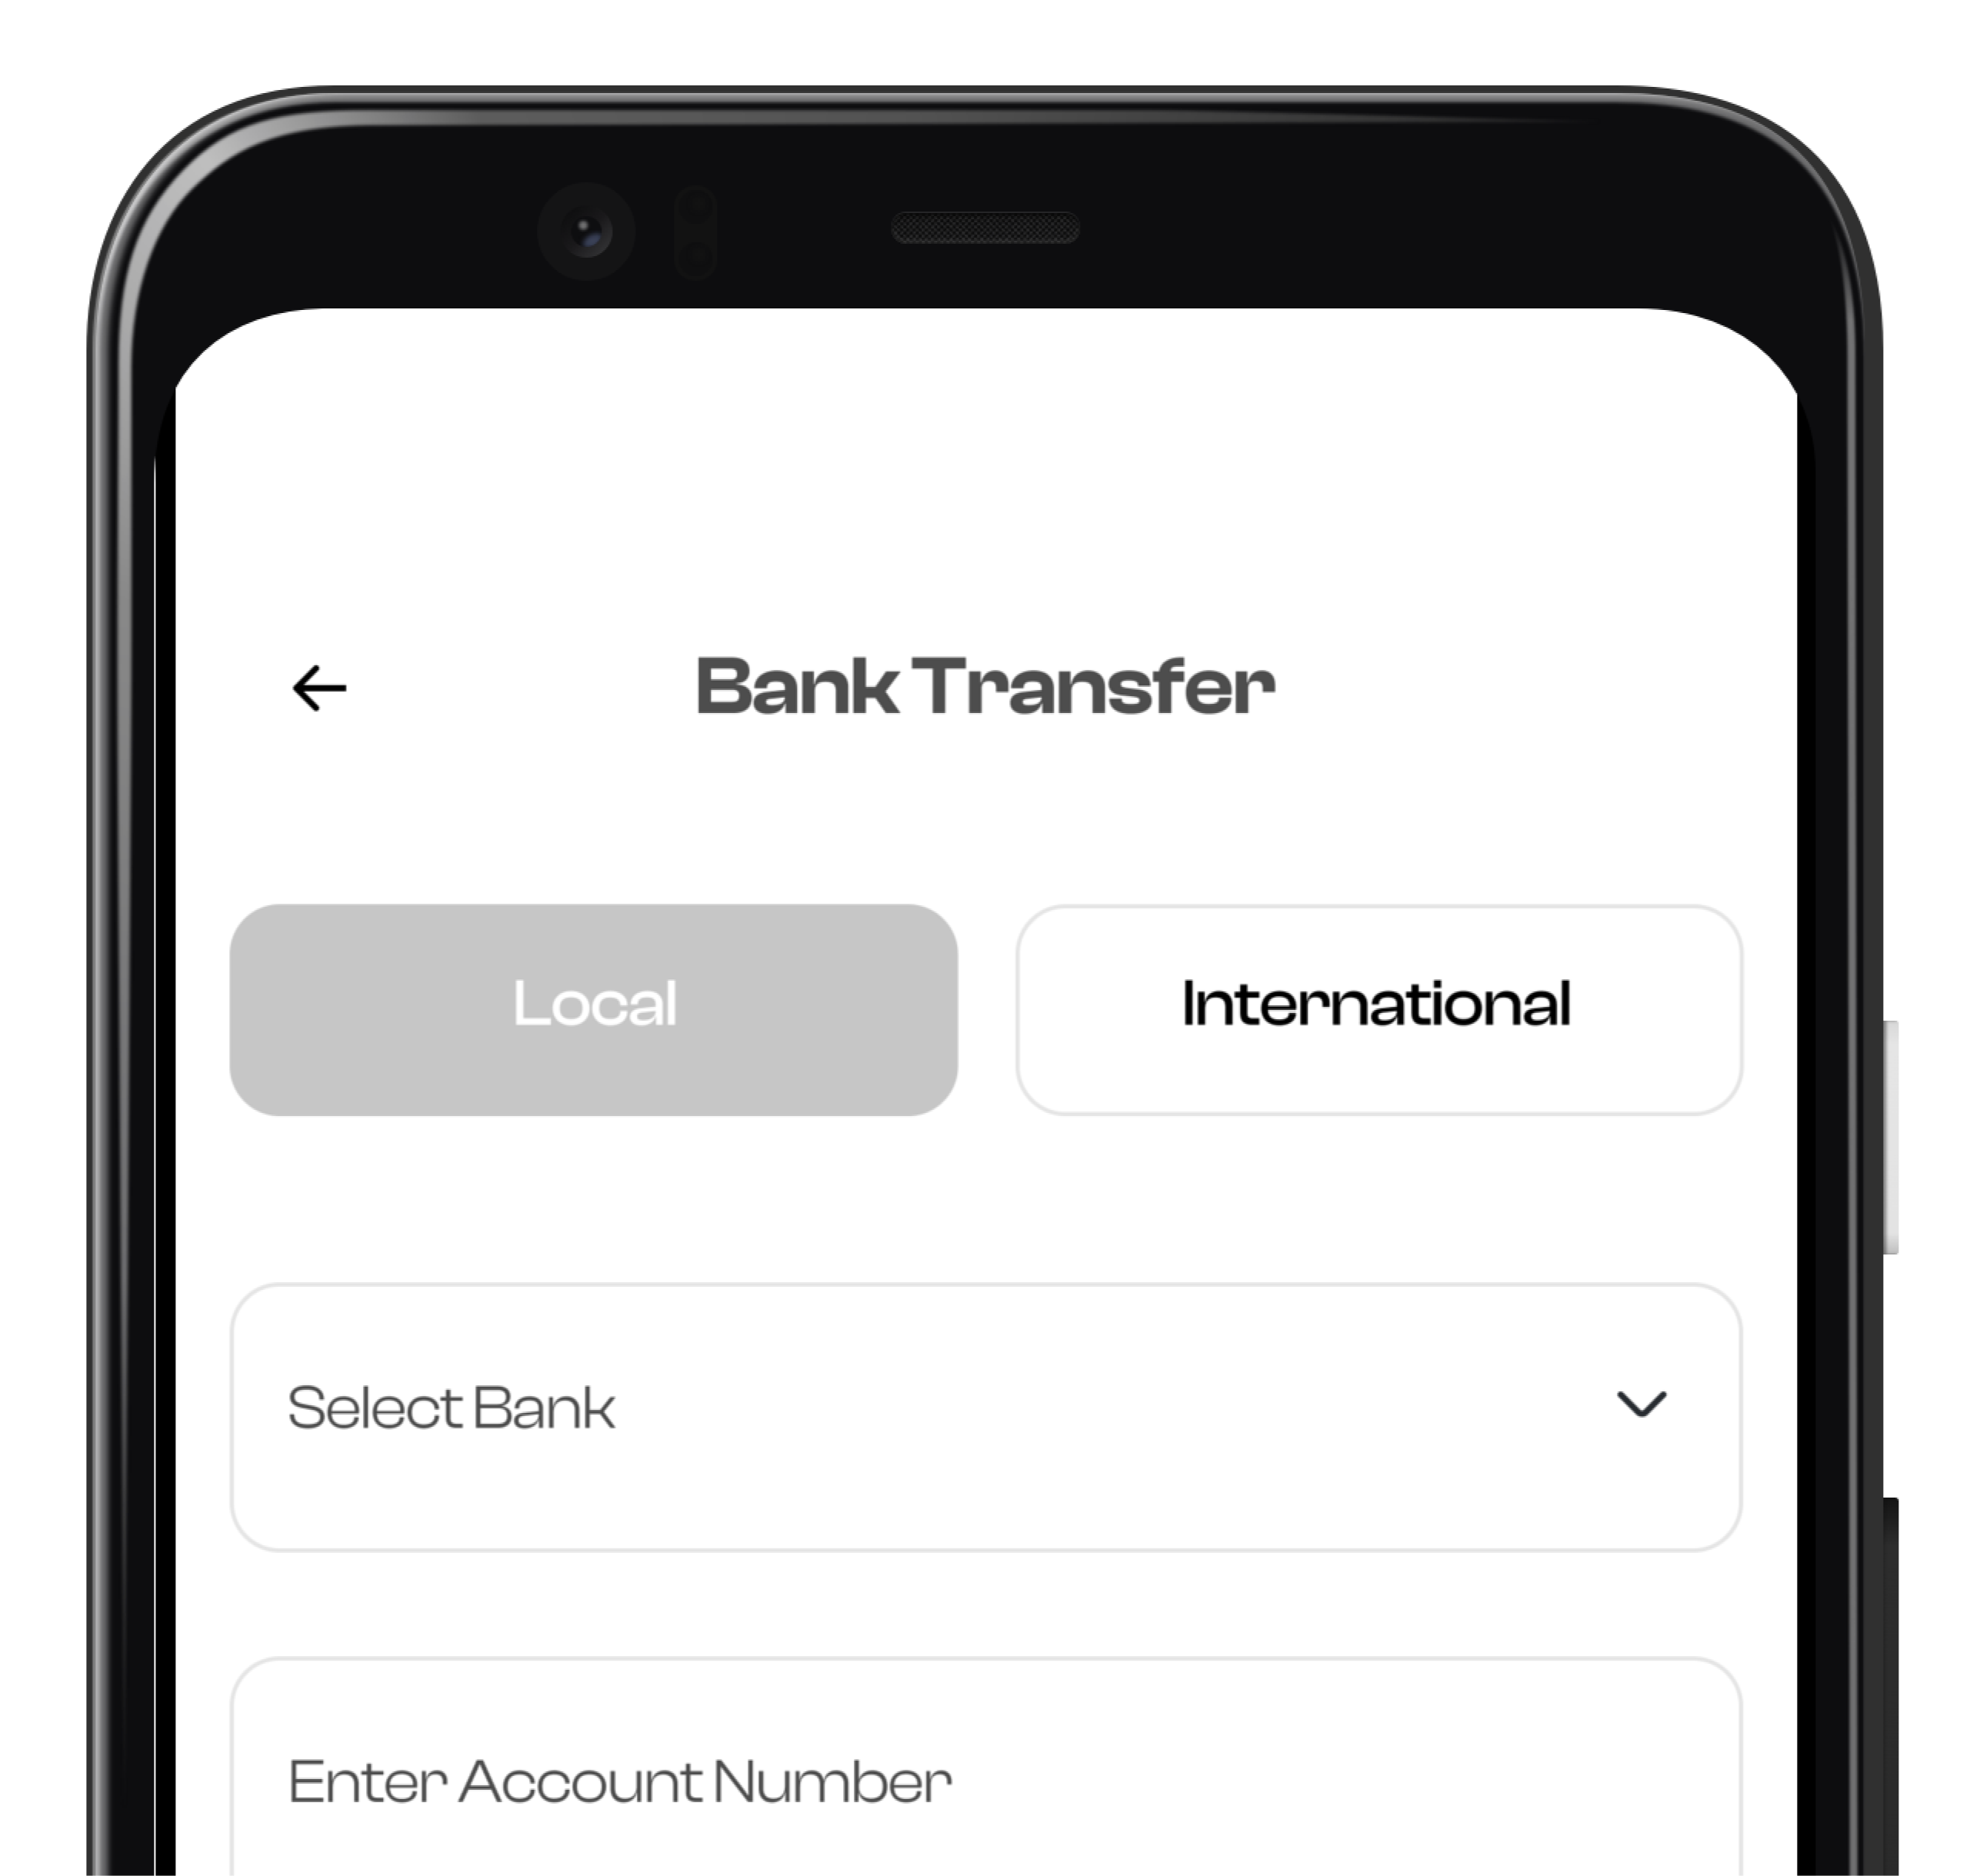 Bank transfer image